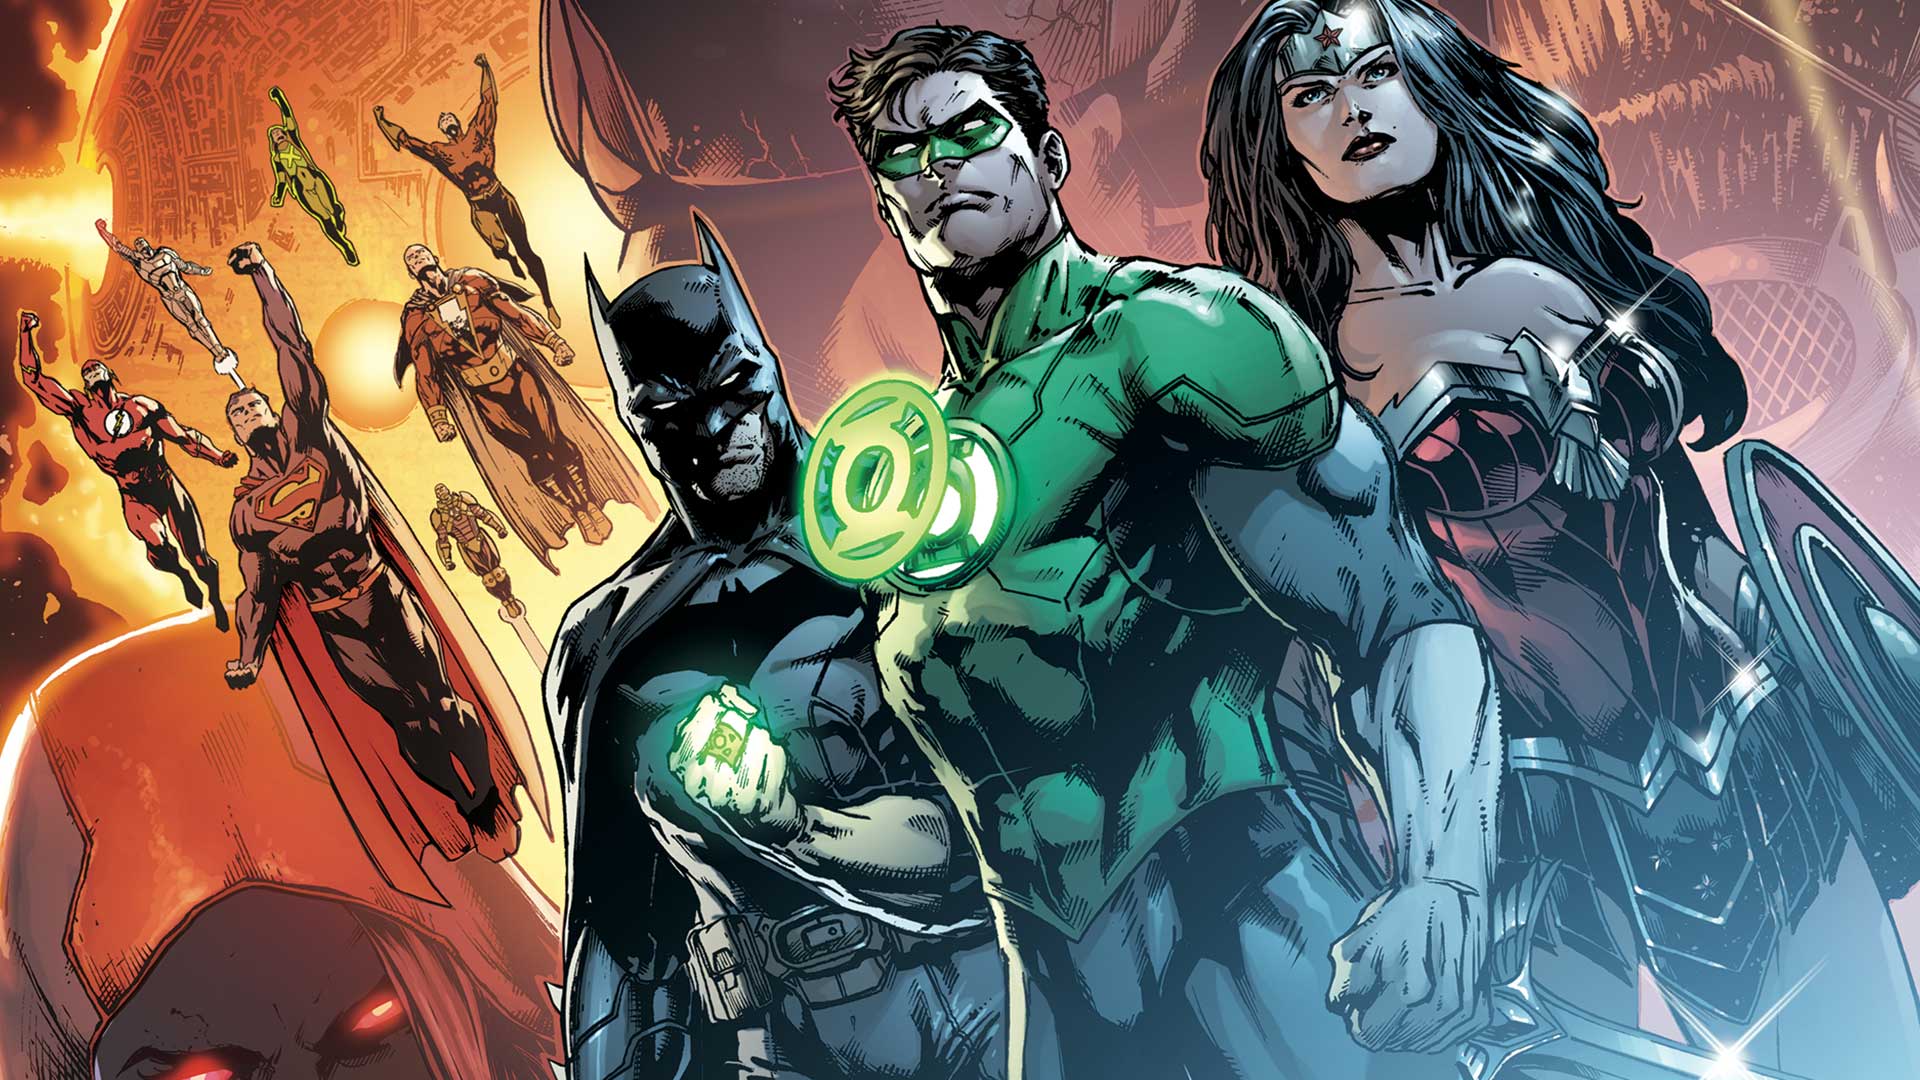 Justice League Volume 7 Darkseid War Part 1 review by Deffinition